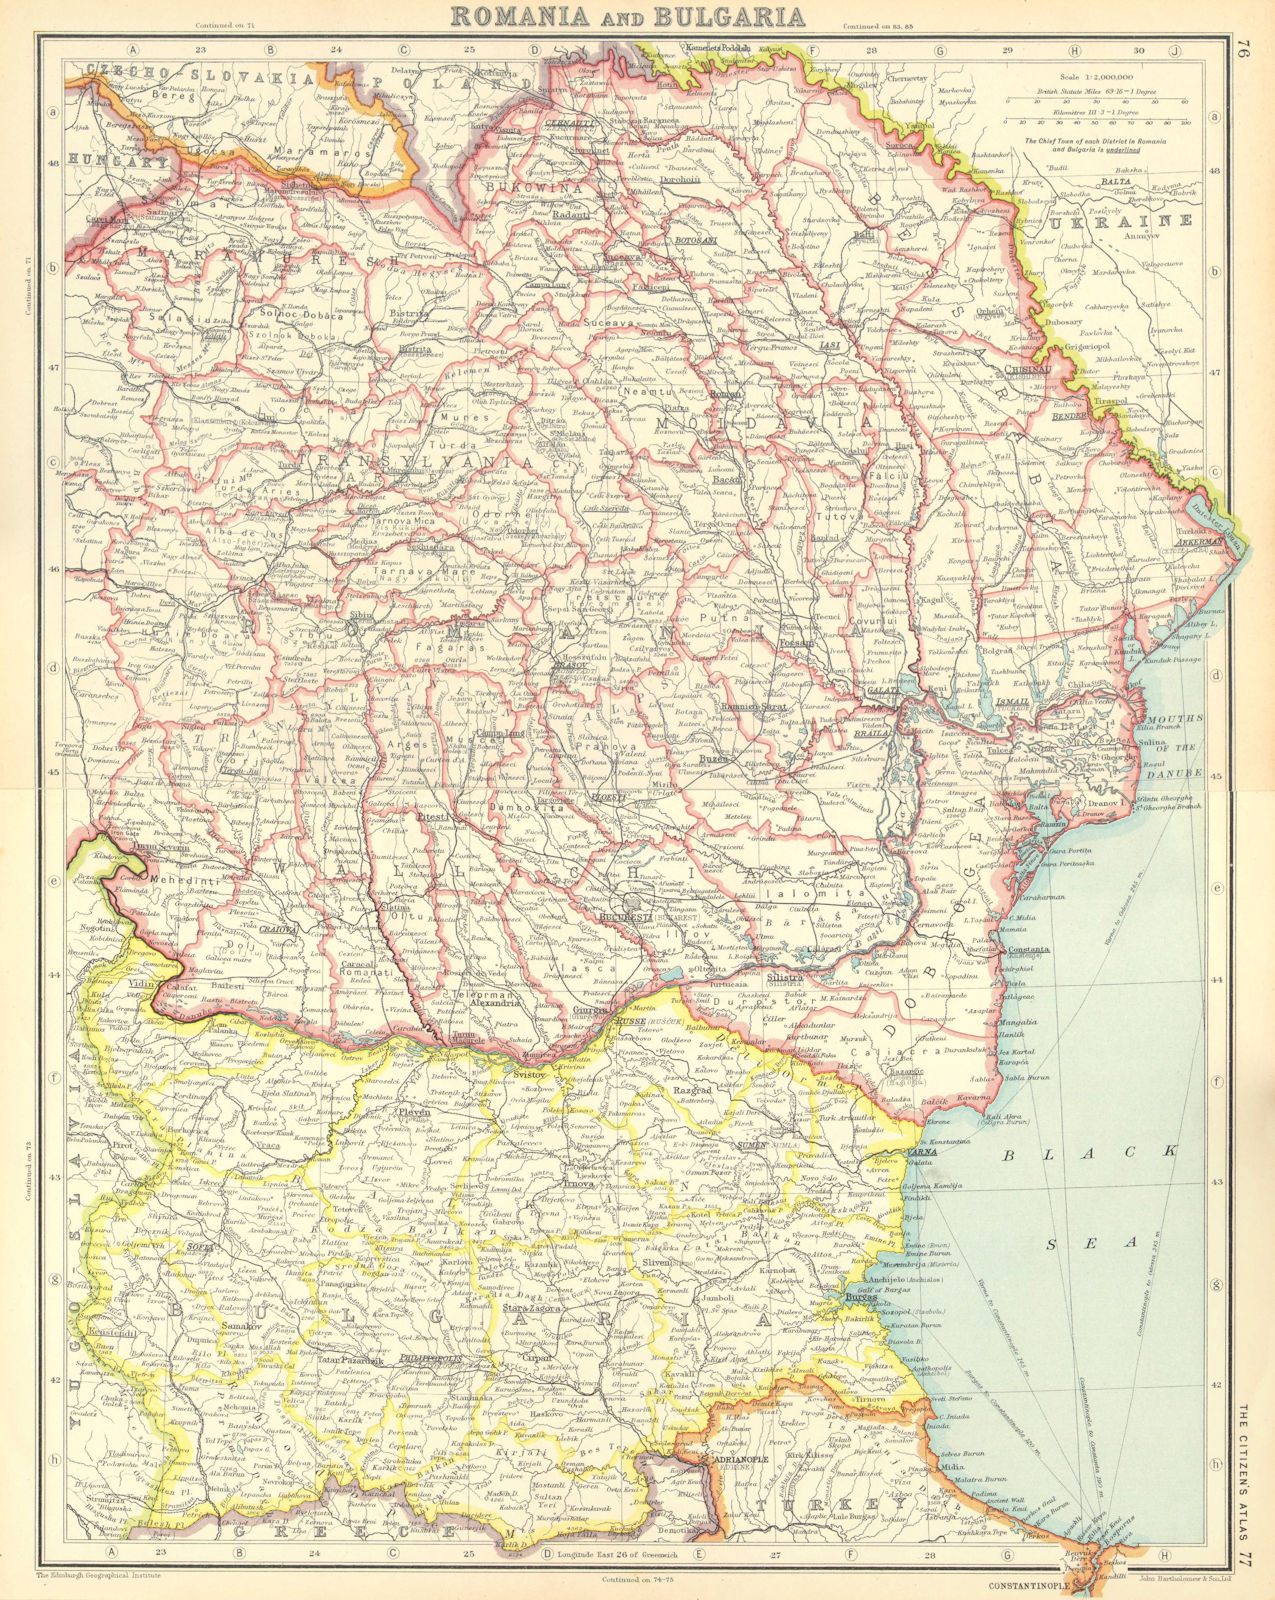 EAST EUROPE. Bulgaria. Romania includes Bessarabia & Southern Dobruja 1924 map